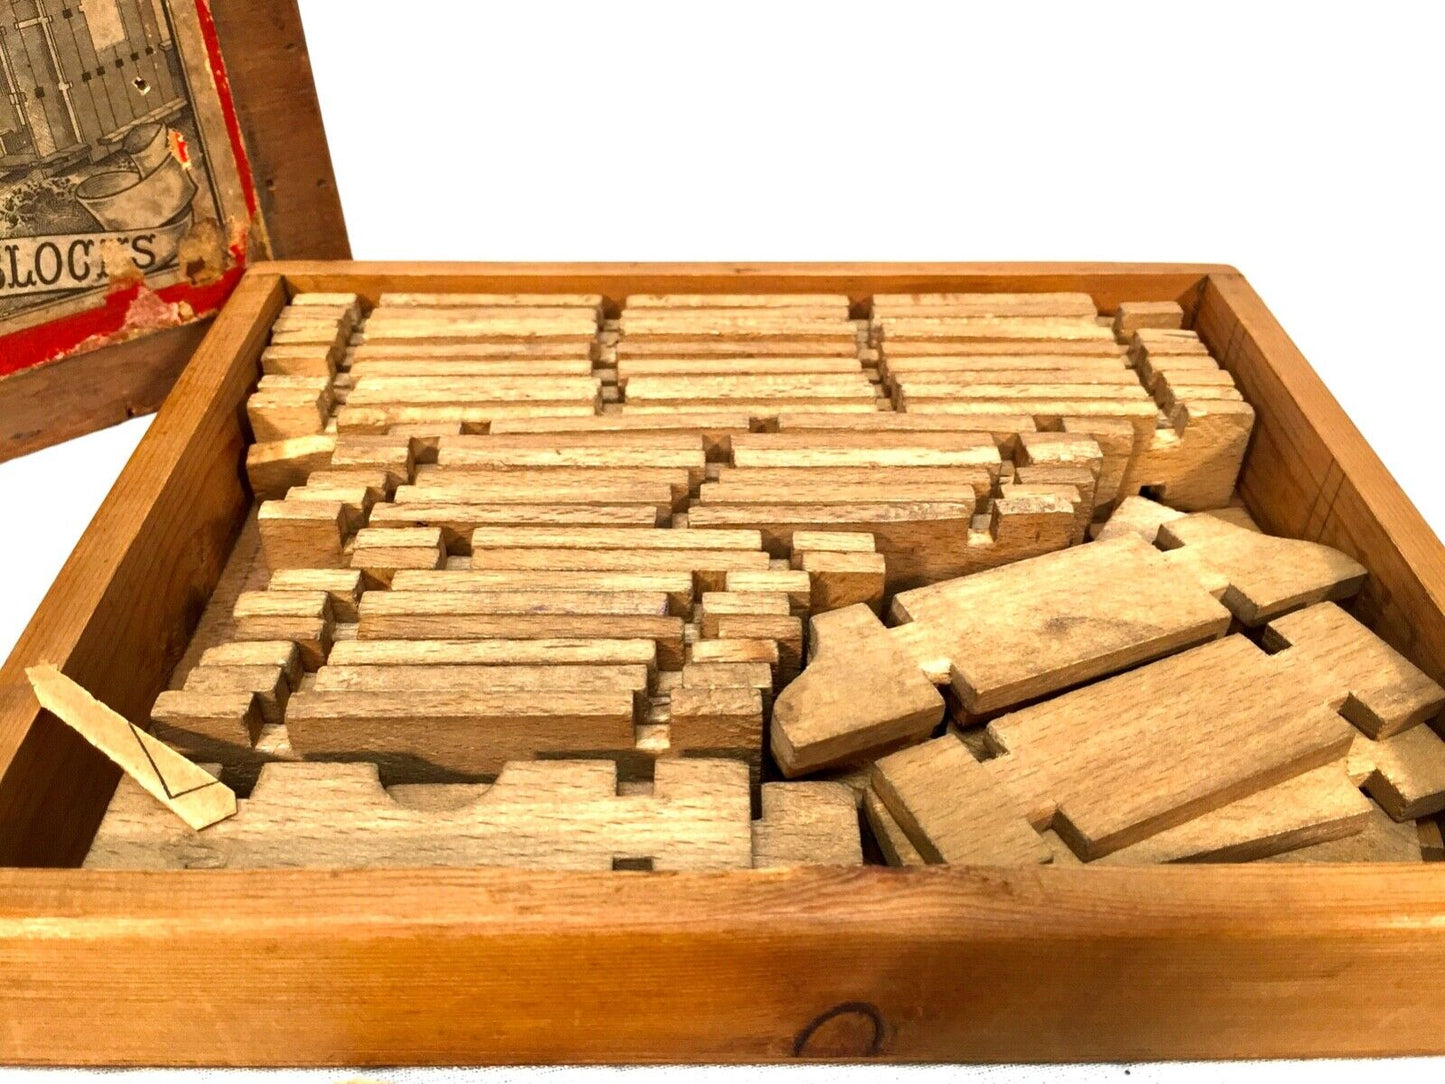 Antique 19th Century Wooden Interlocking Building Block Game / Boxed Set No. 1